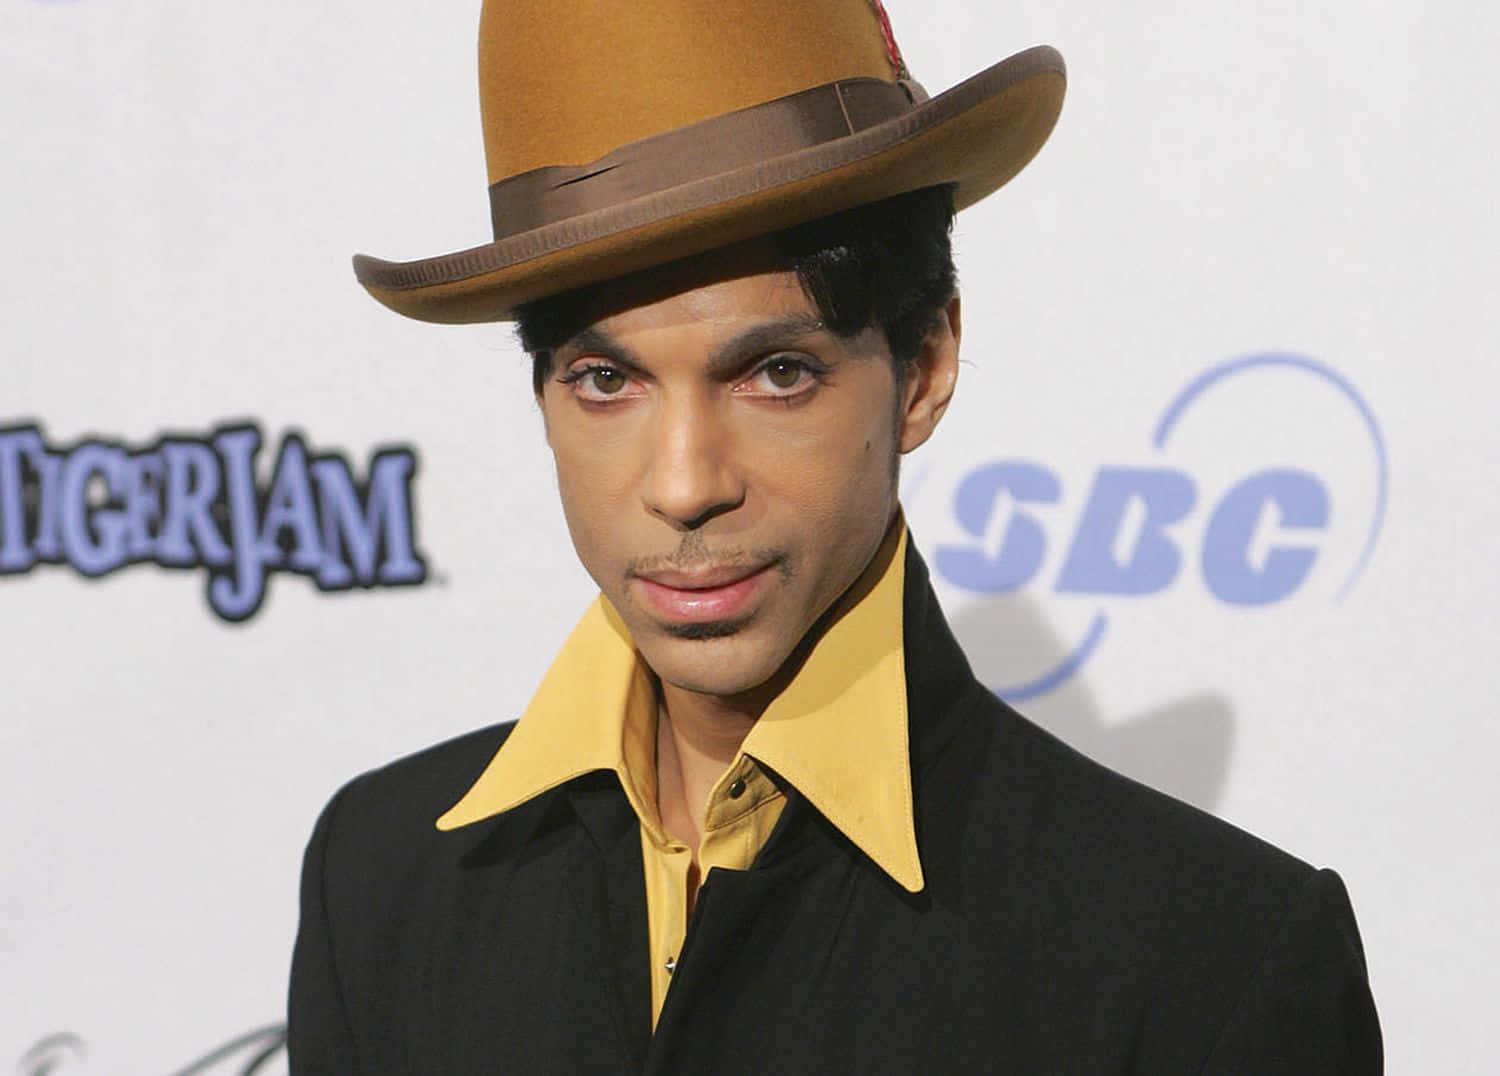 Legendariskmusiker, Prince.